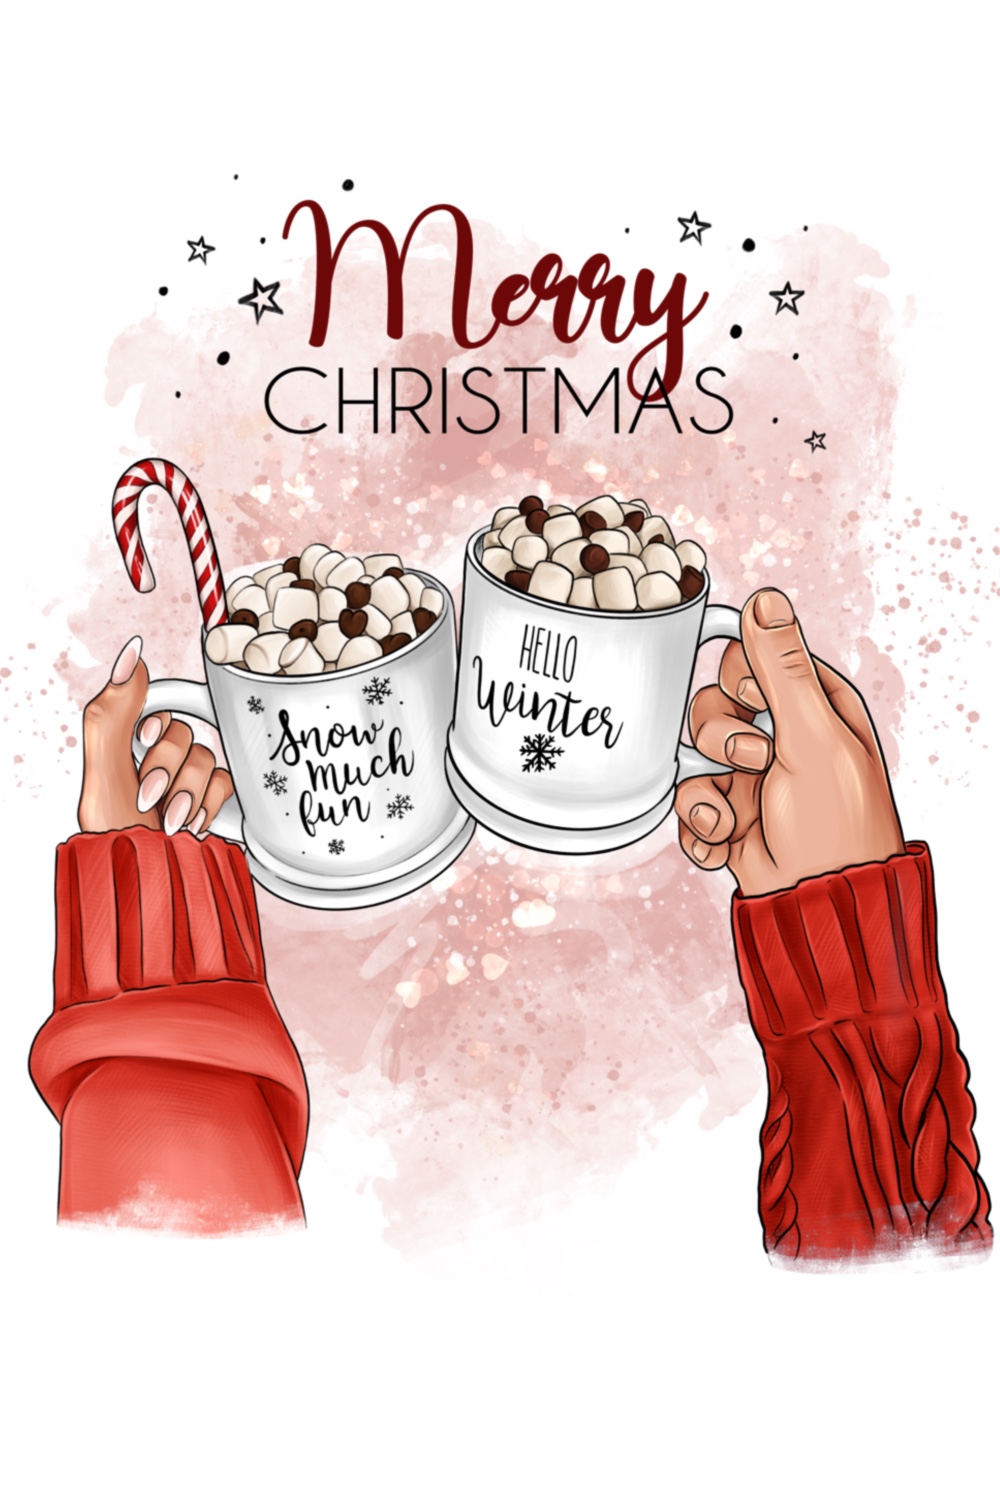 Сouple With Mugs Winter Illustration Pinterest Image.